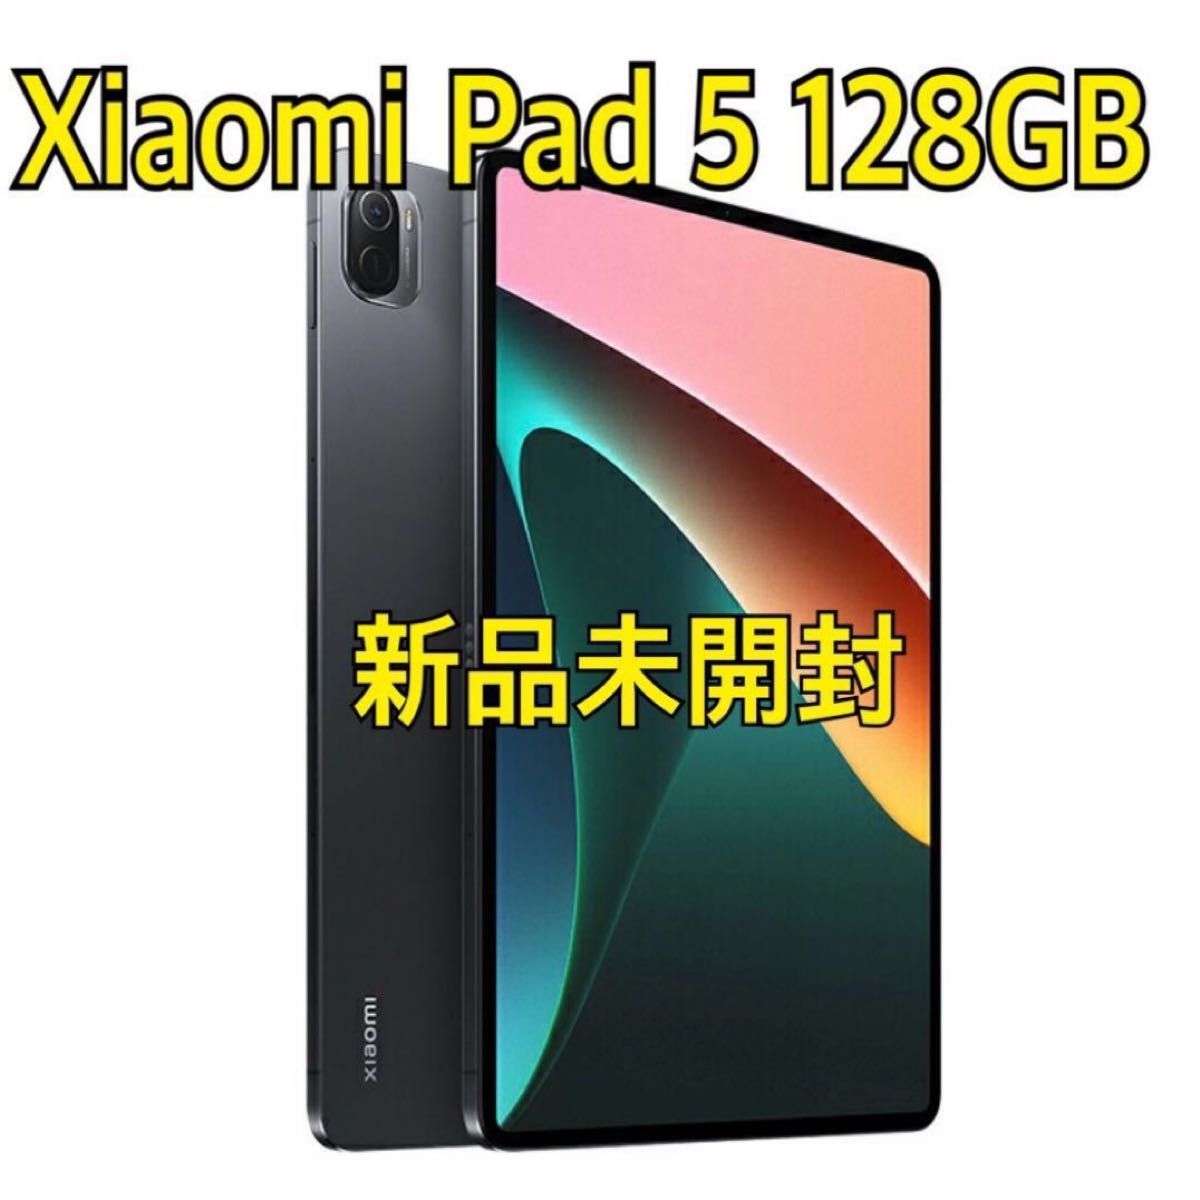 Xiaomi Pad 5 128GB タブレットPC タブレットPC www.cxrtrans.com